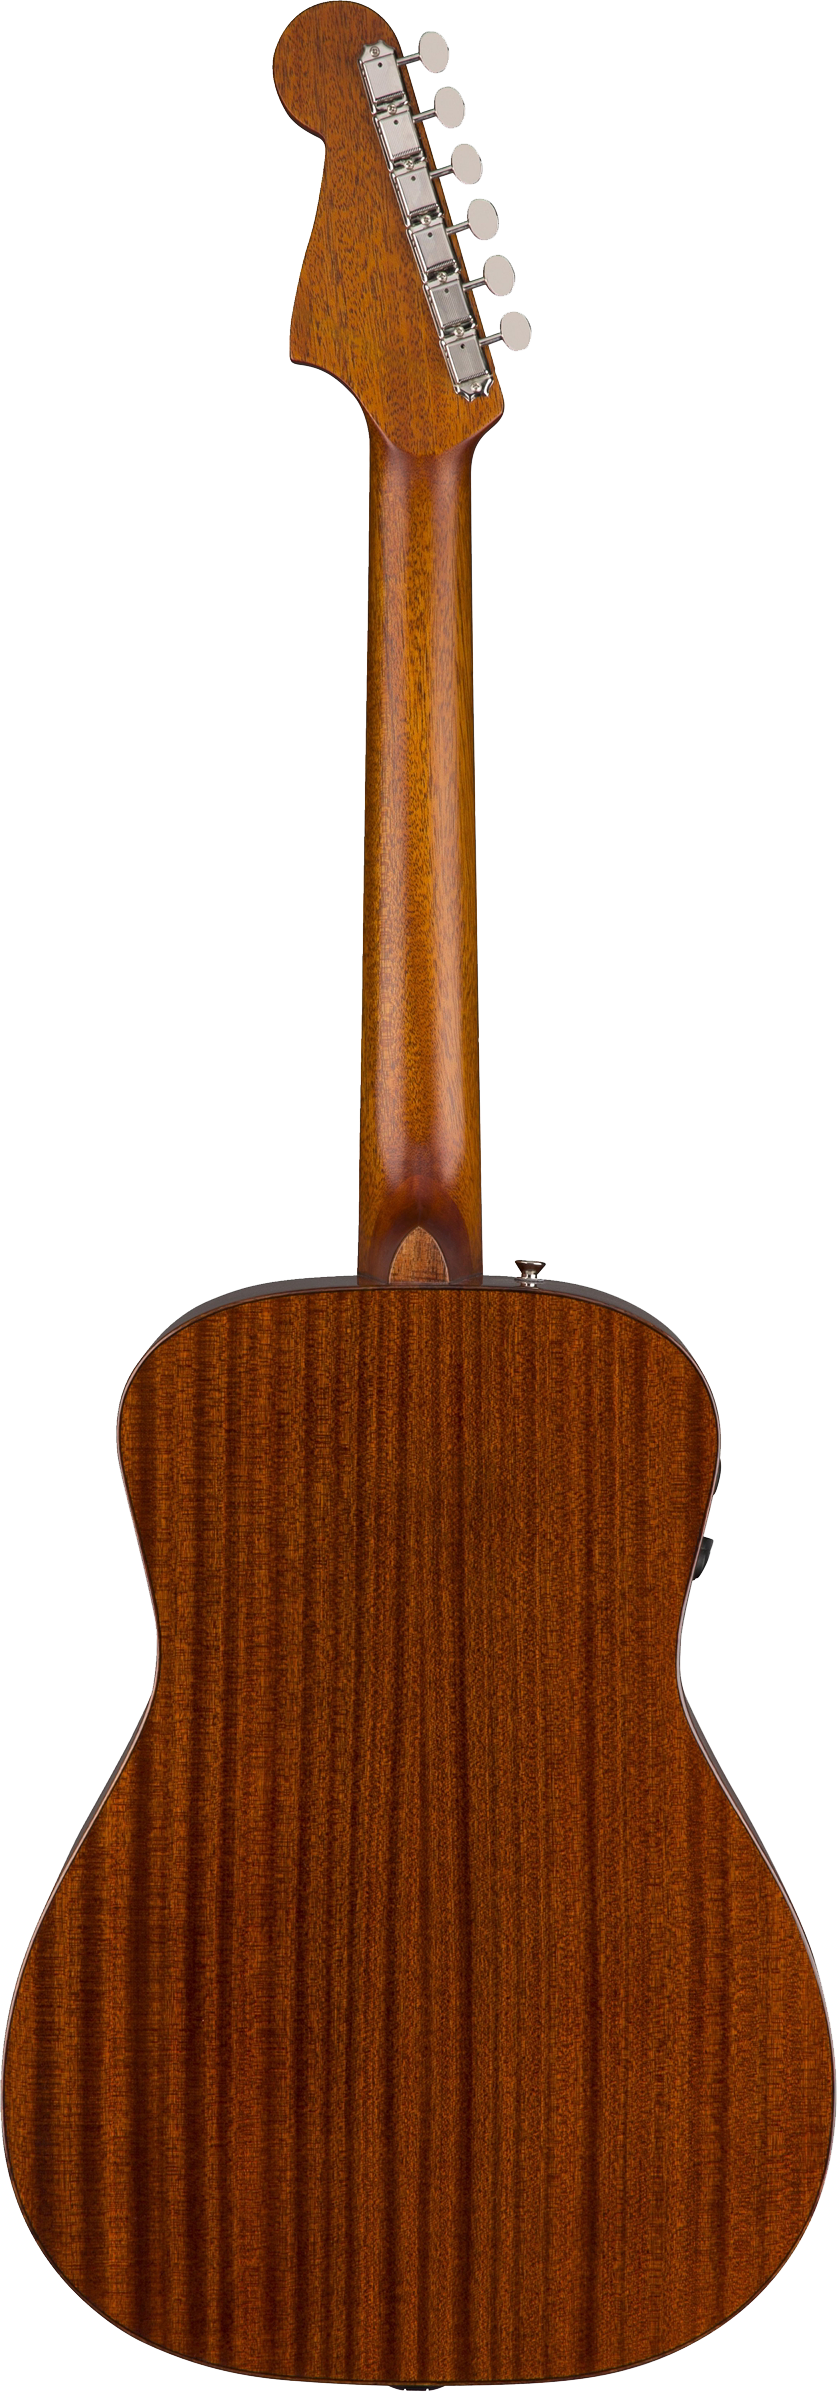 Fender Malibu Classic Acoustic / Electric Guitar - Hot Rod Red Metallic